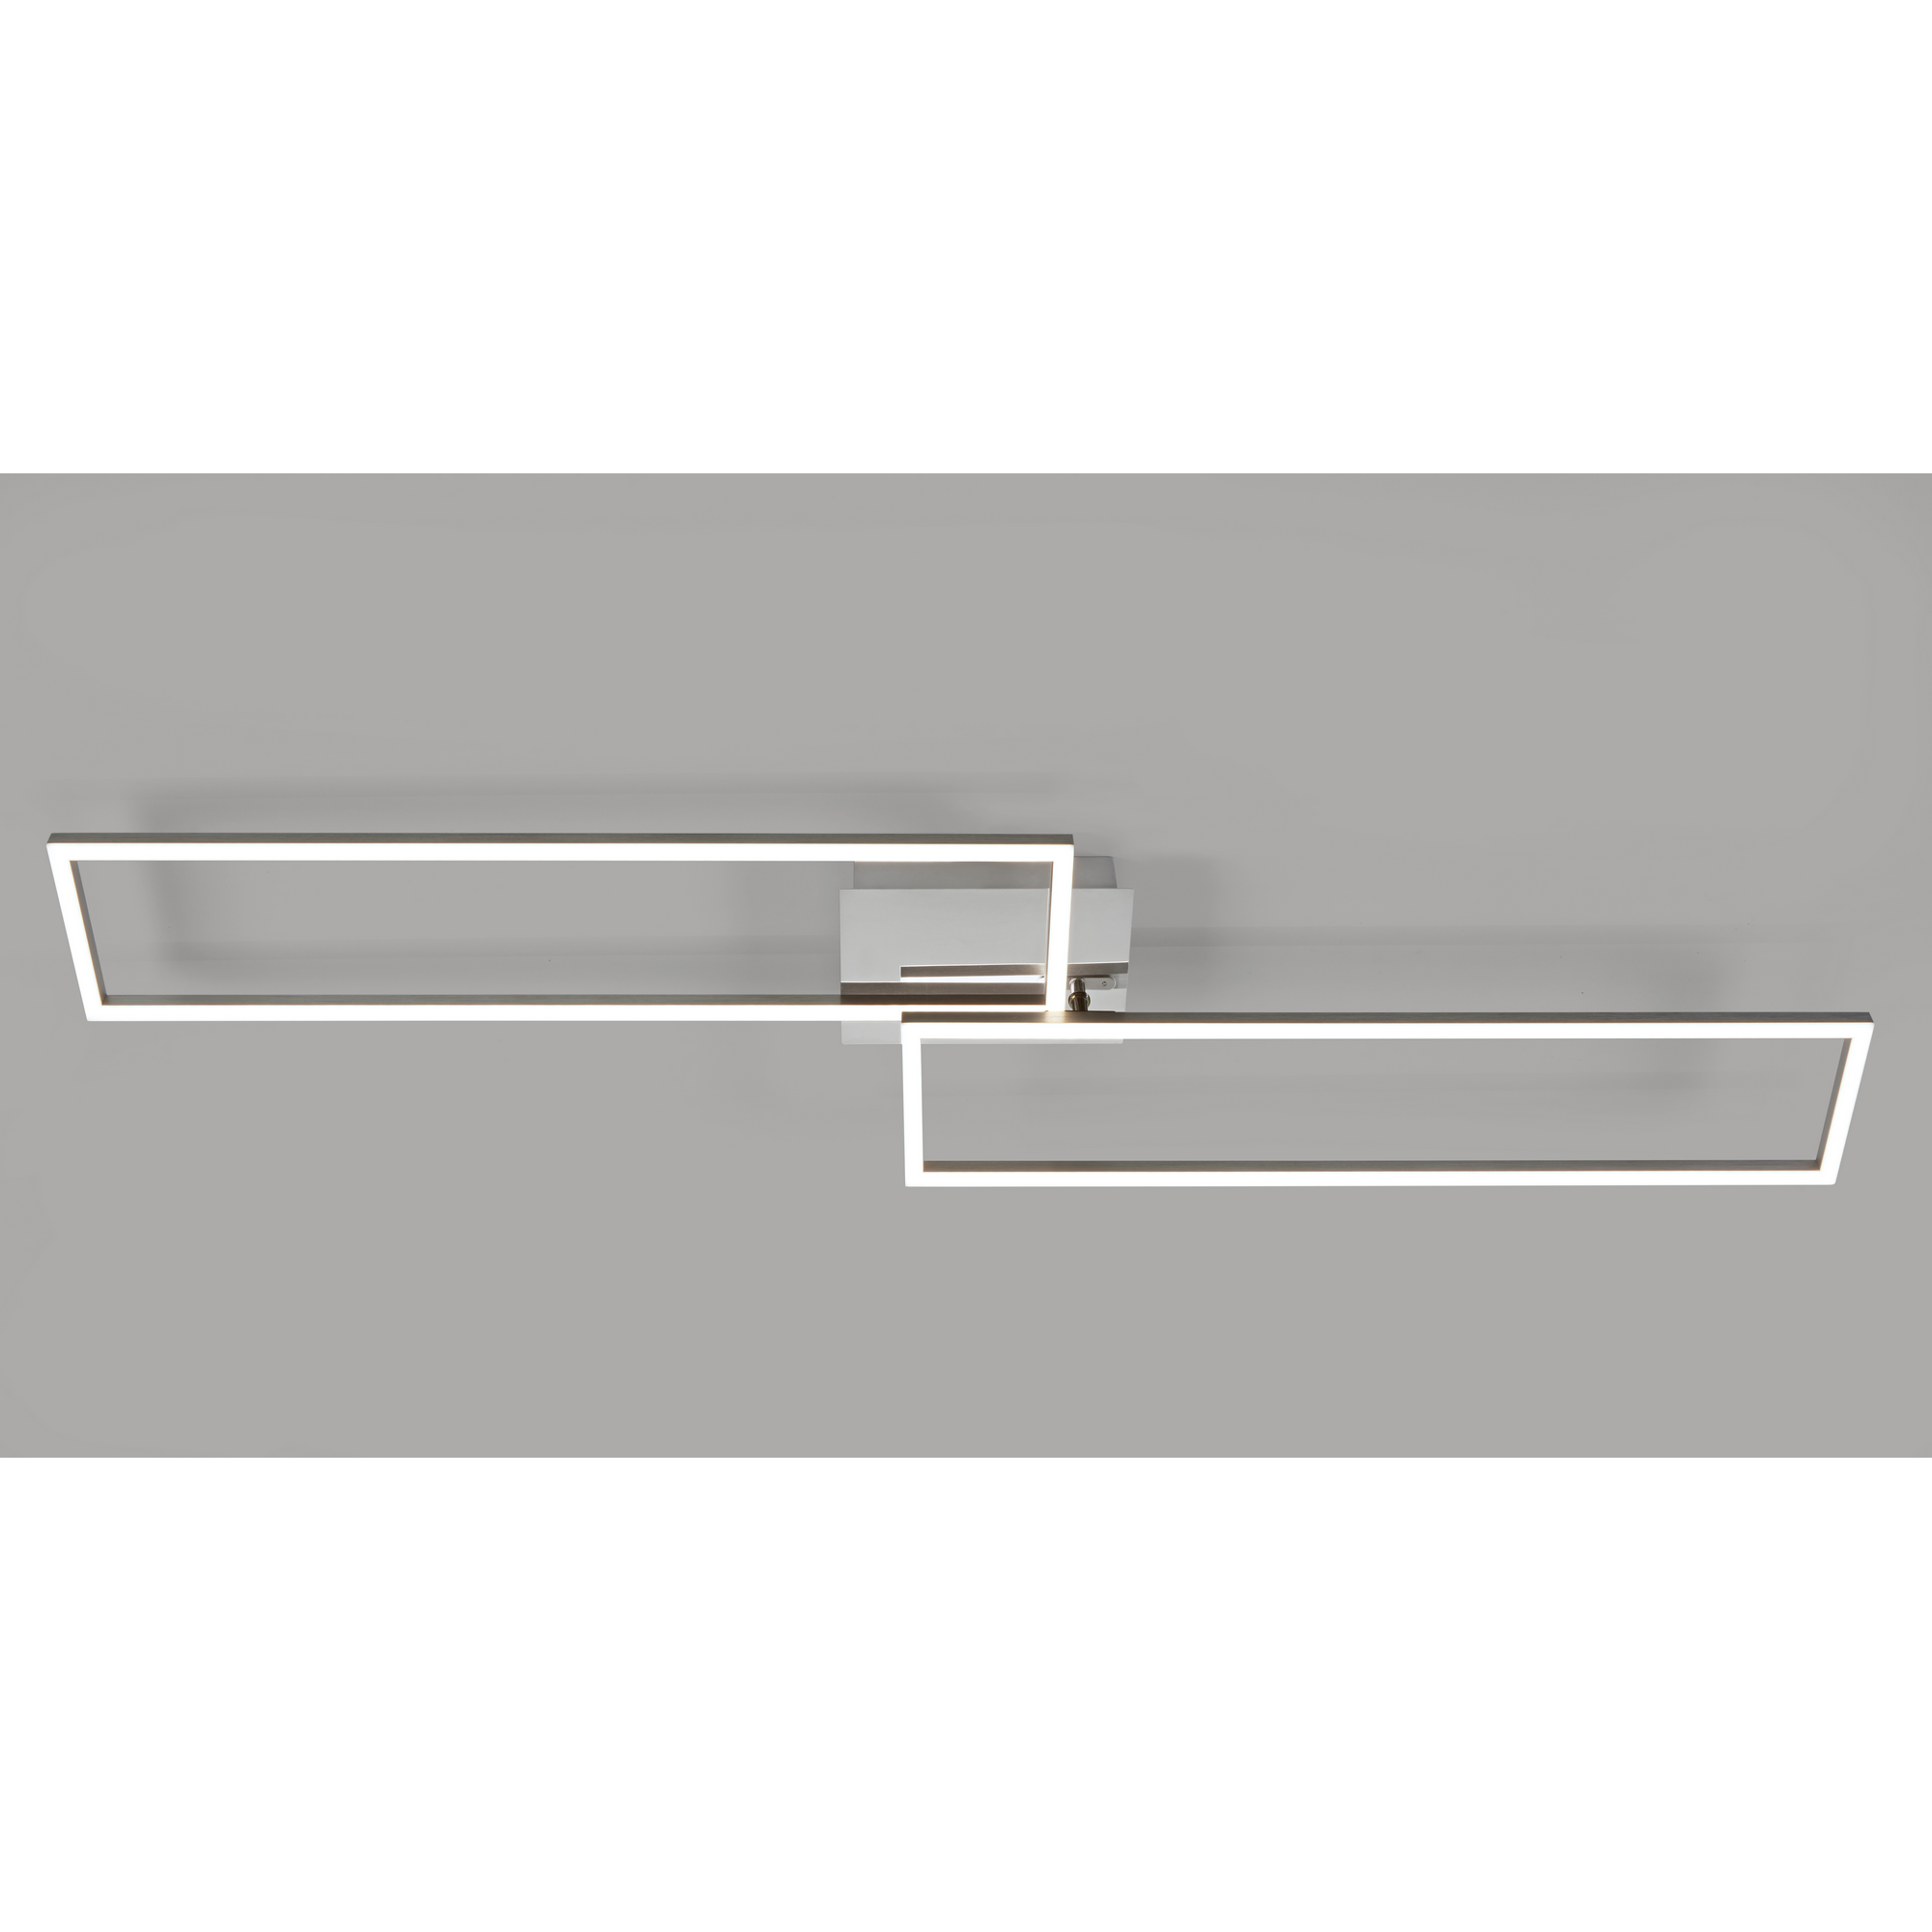 LED-Deckenleuchte Acryl 110 x 24,8 x 7,8 cm mit Fernbedienung + product picture